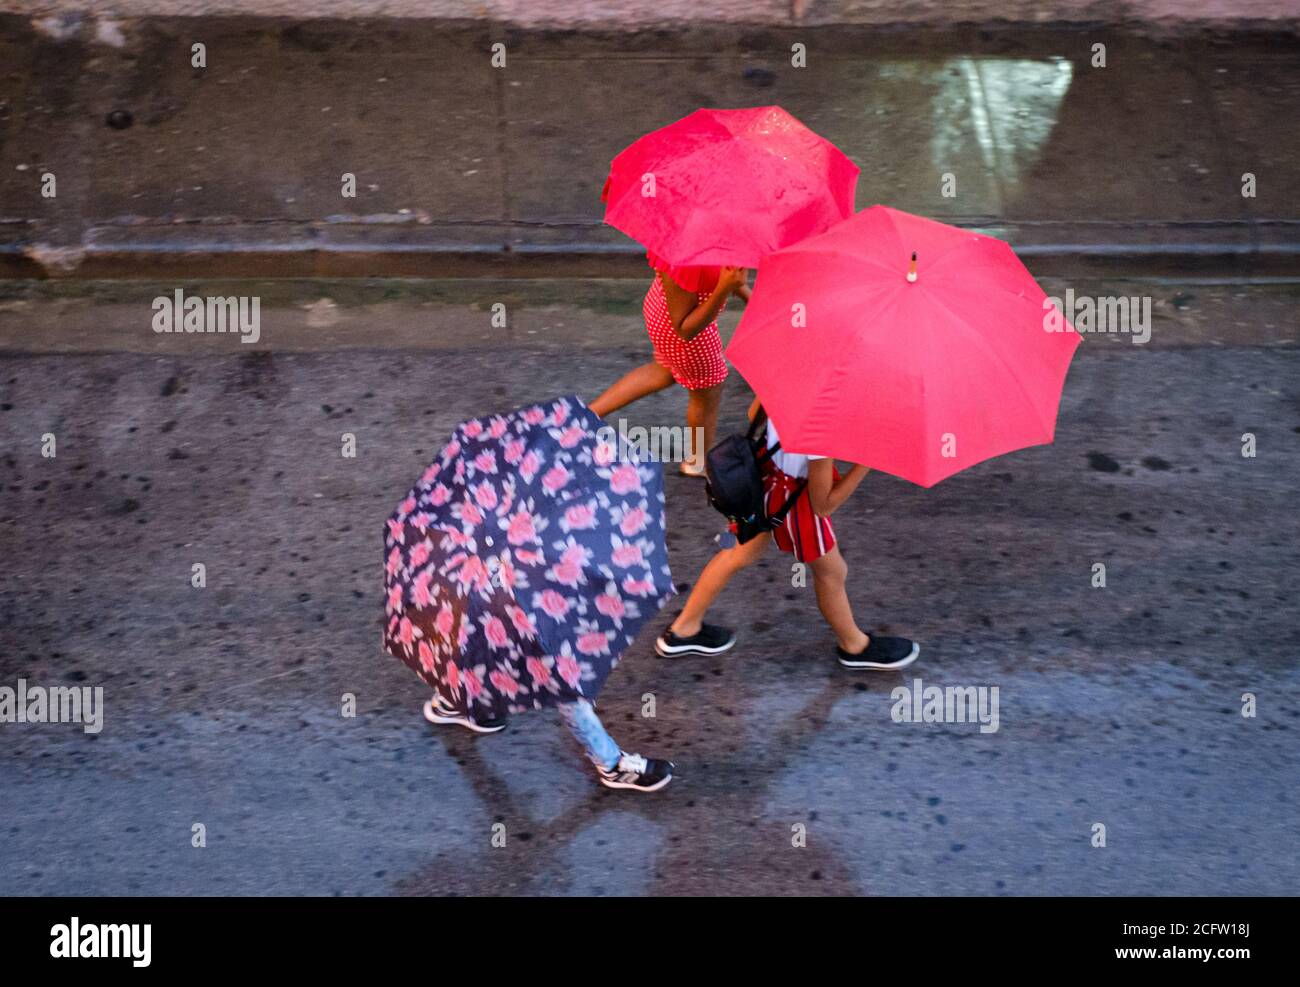 SANTIAGO DE CUBA, KUBA - CA. JANUAR 2020: Fußgänger, die an einem regnerischen Tag in Santiago de Cuba spazieren. Stockfoto